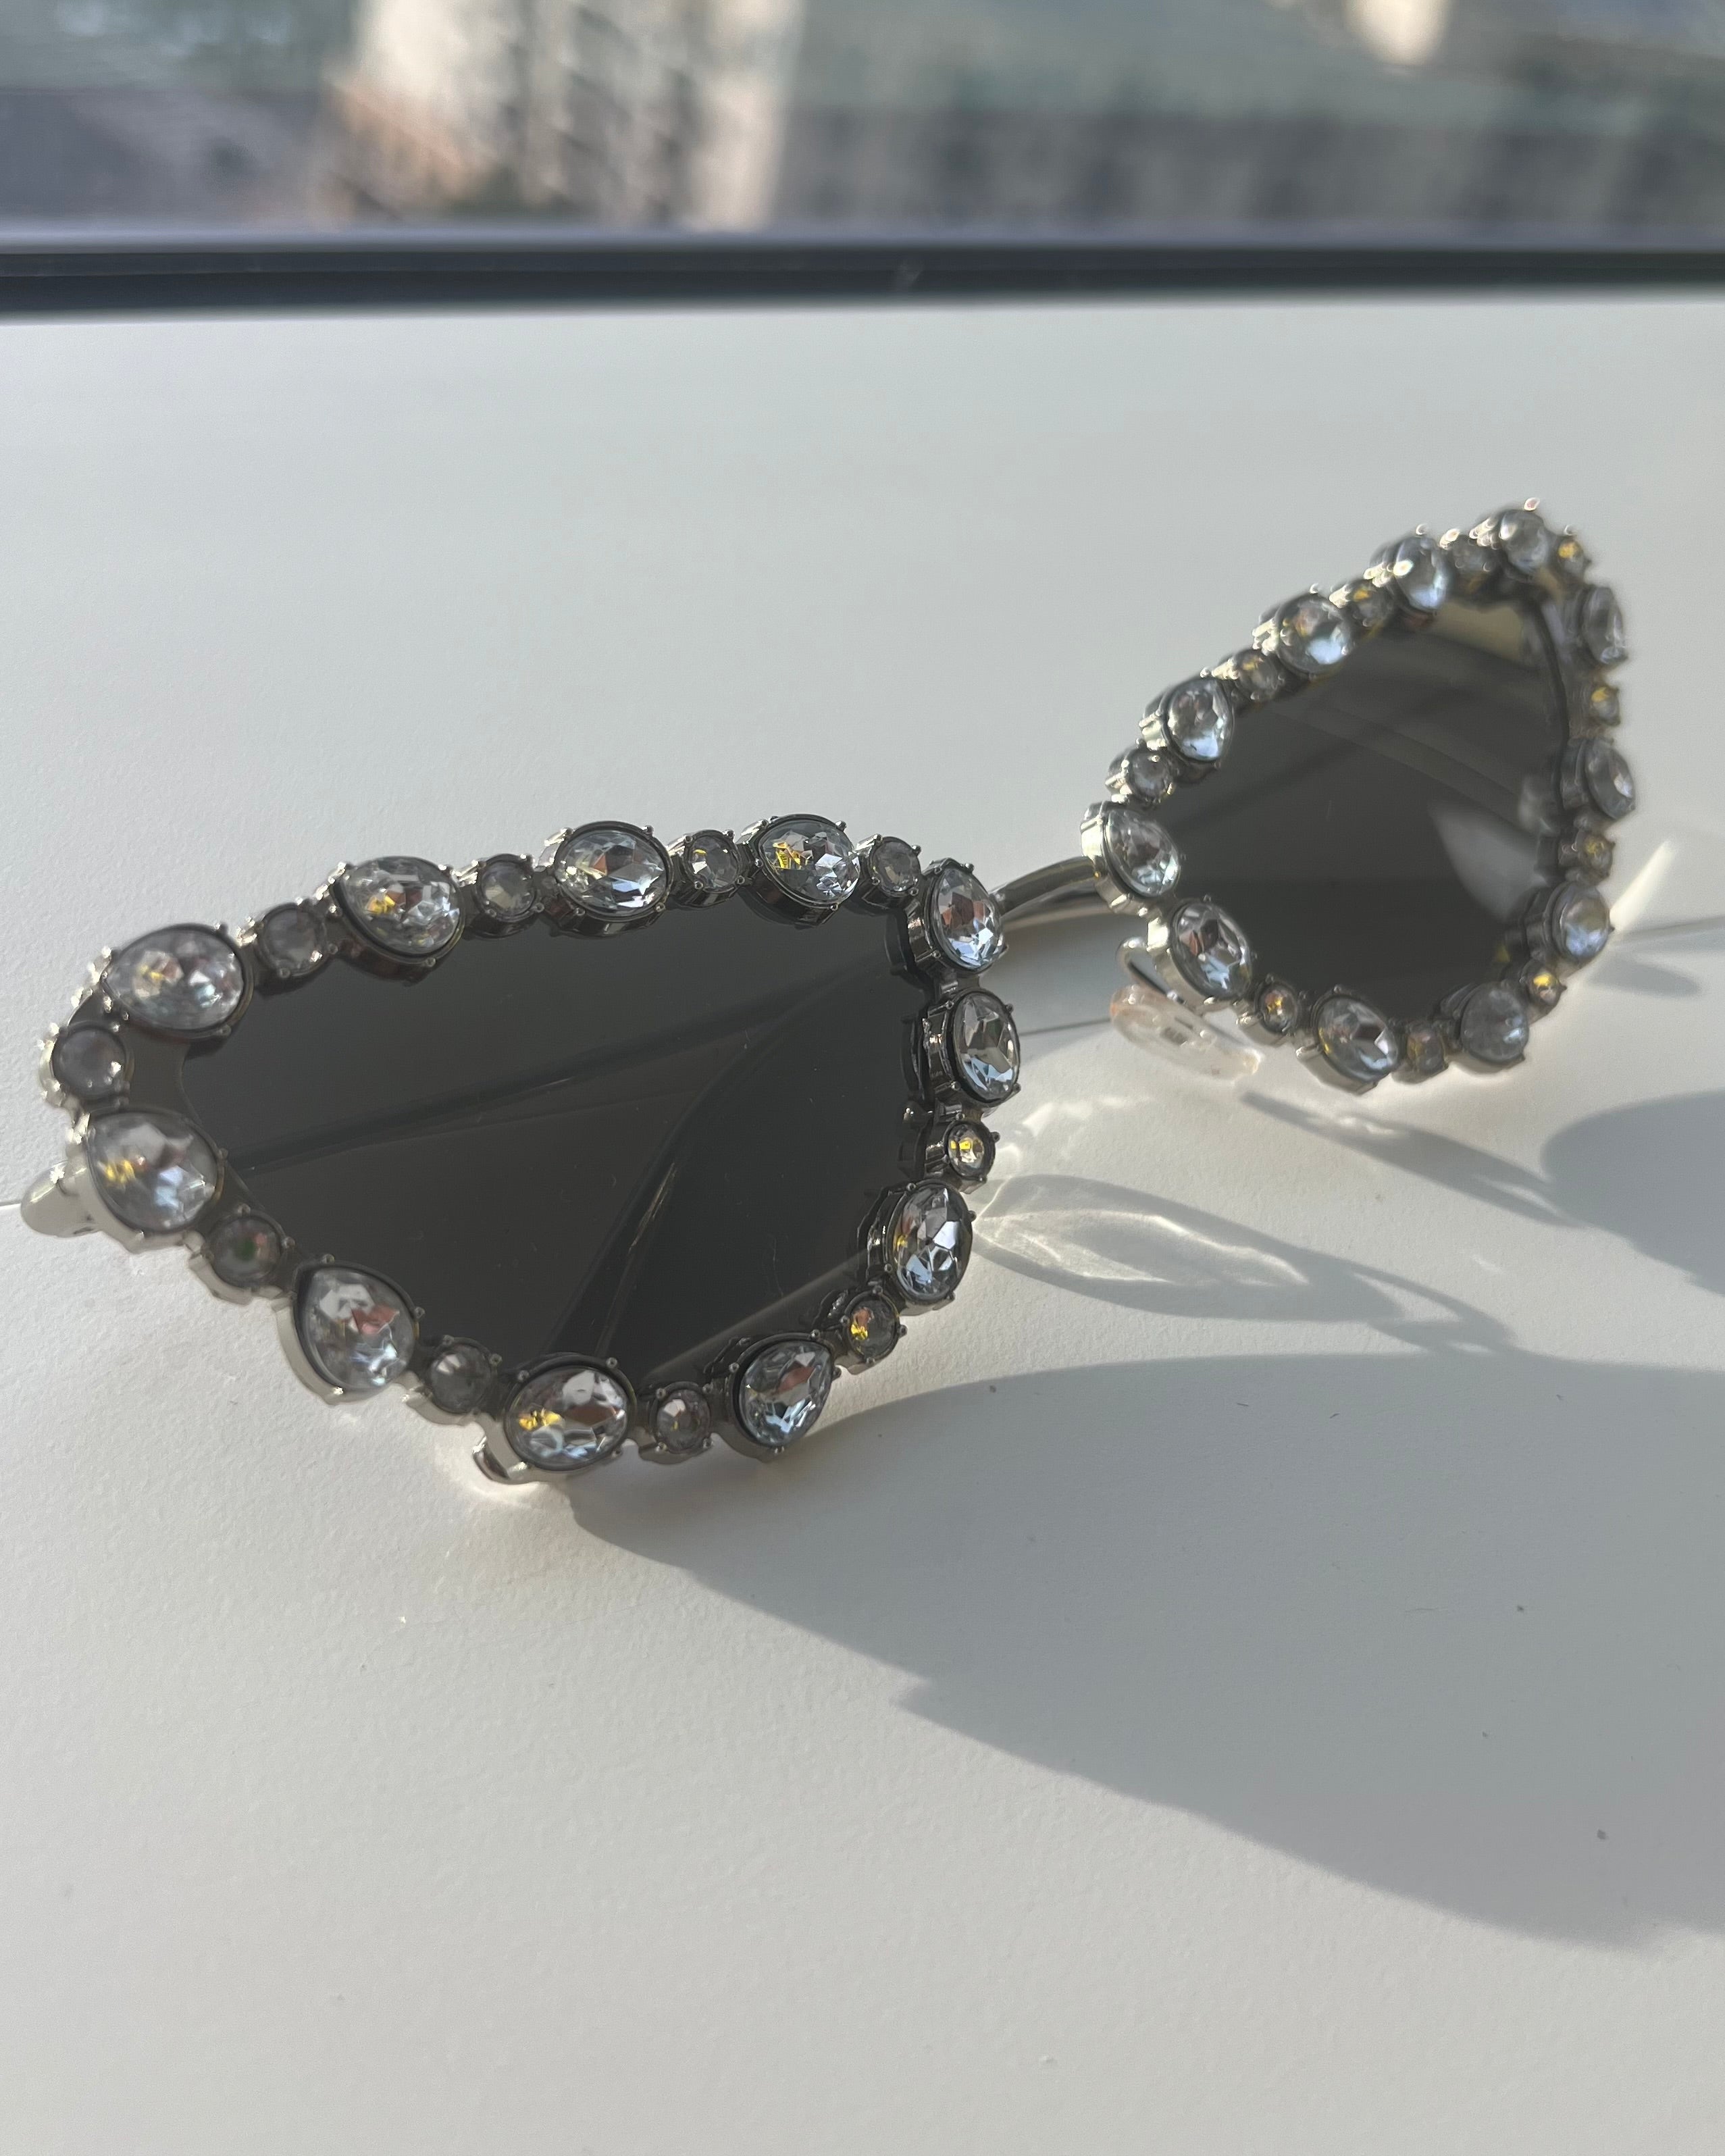 Bejeweled : Sunglasses